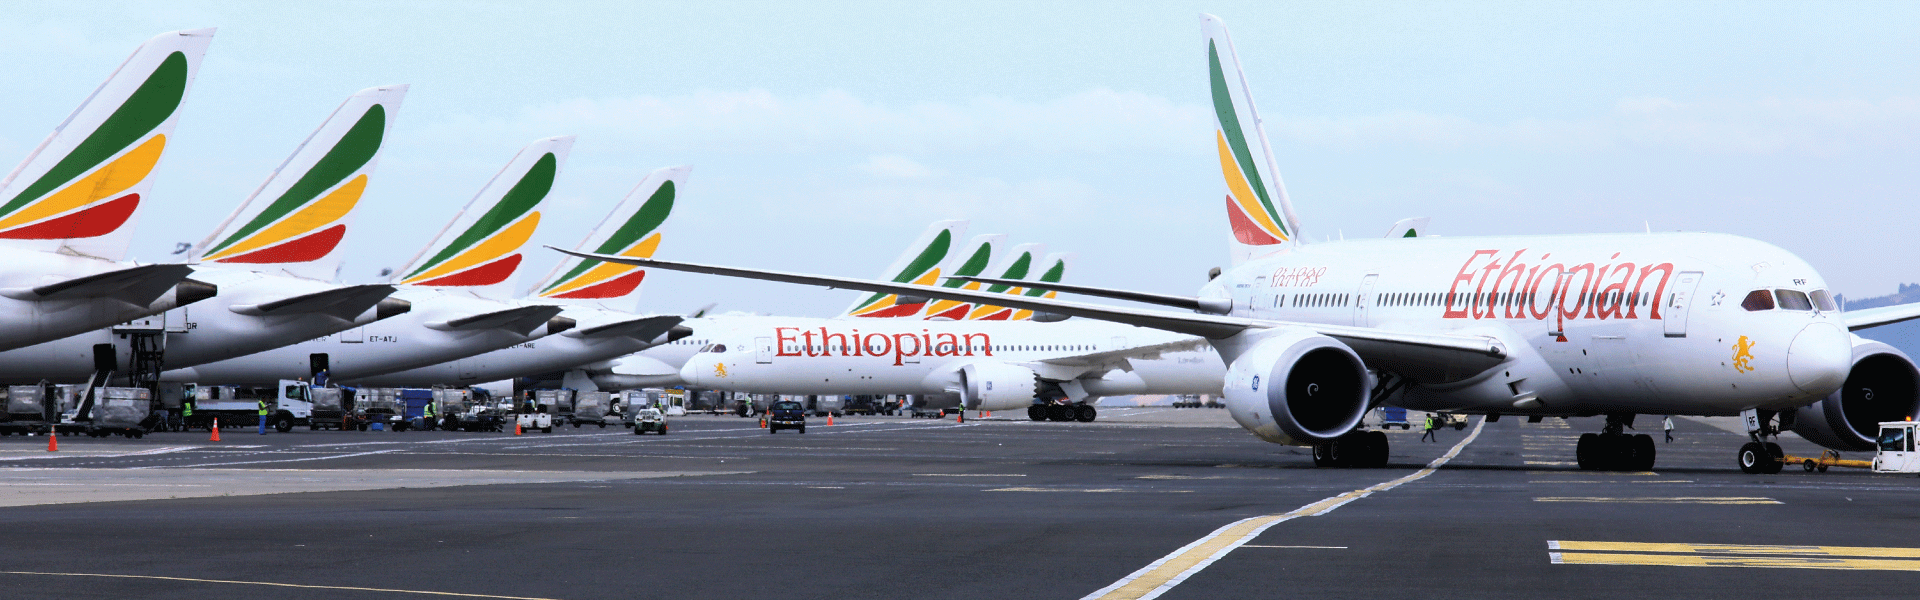 Ethiopian-Airlines Careers